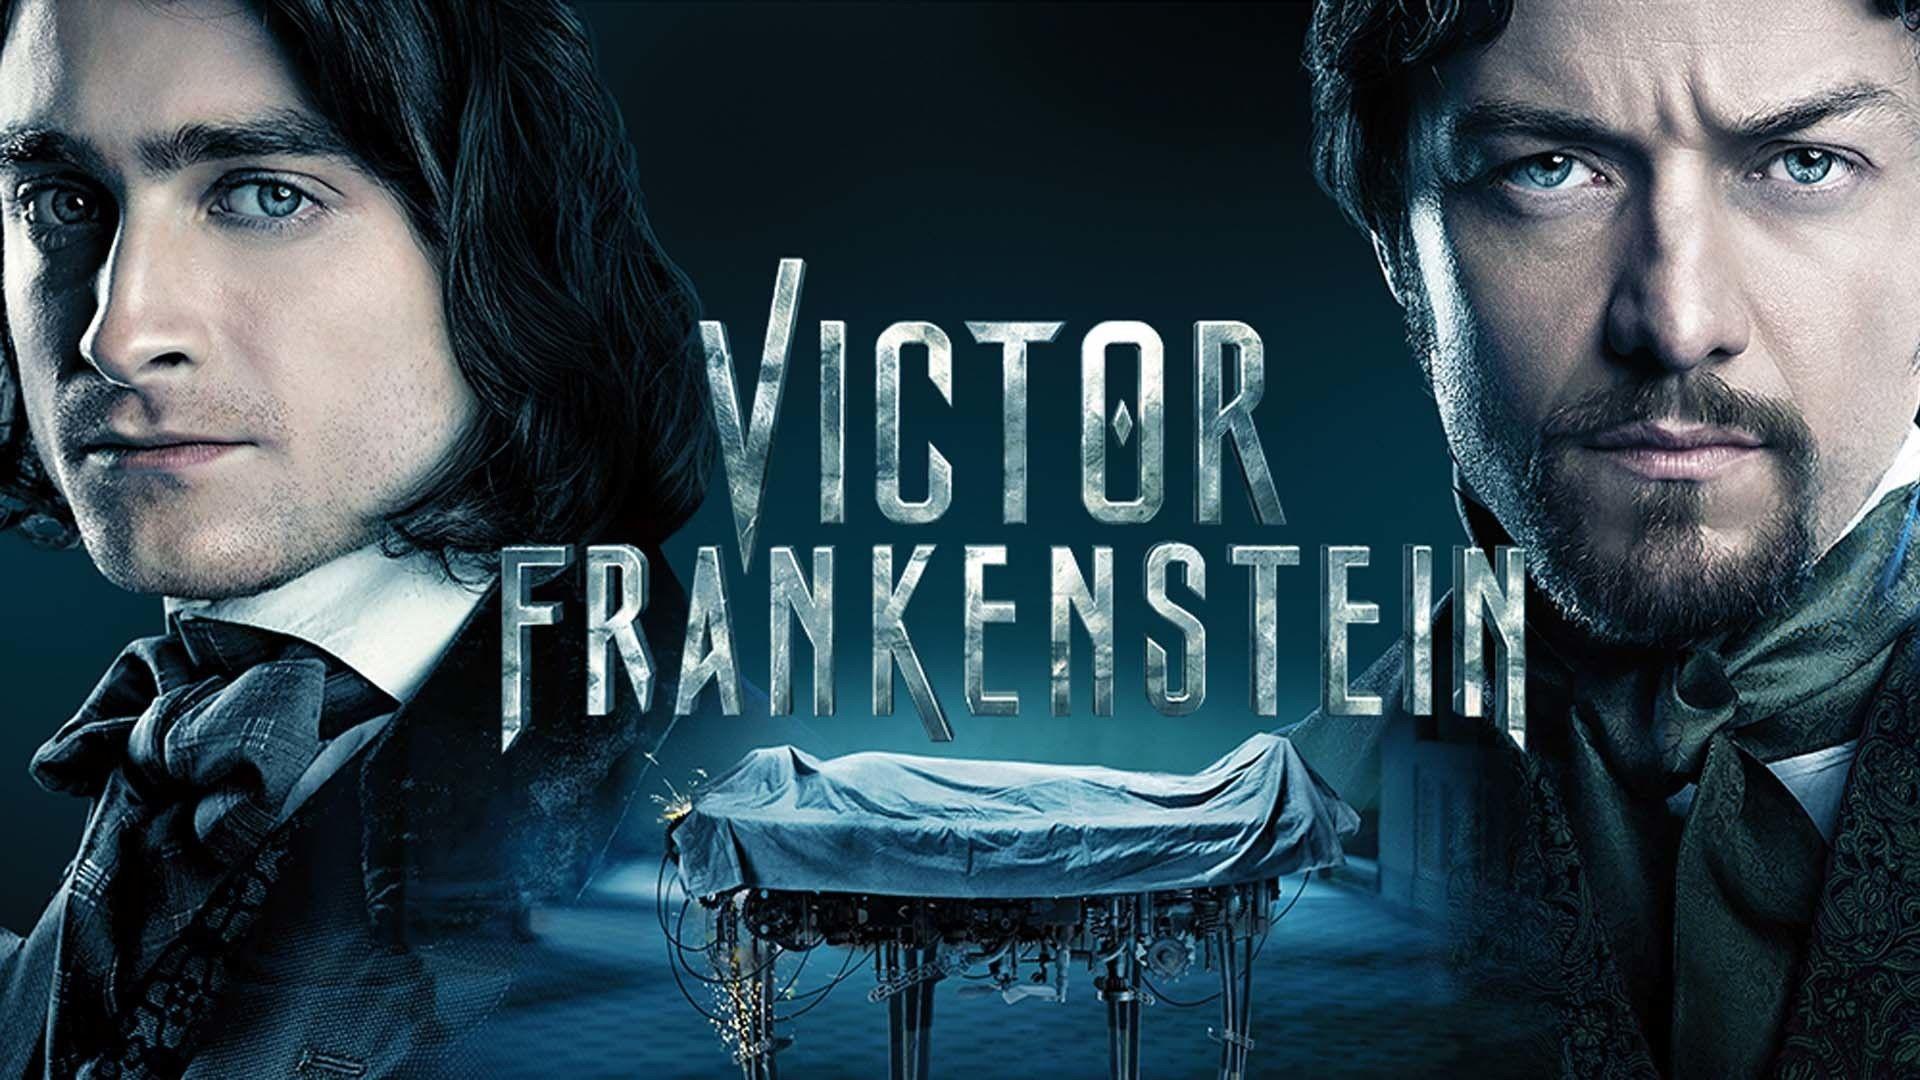 HD Victor Frankenstein Wallpaper, Live Victor Frankenstein